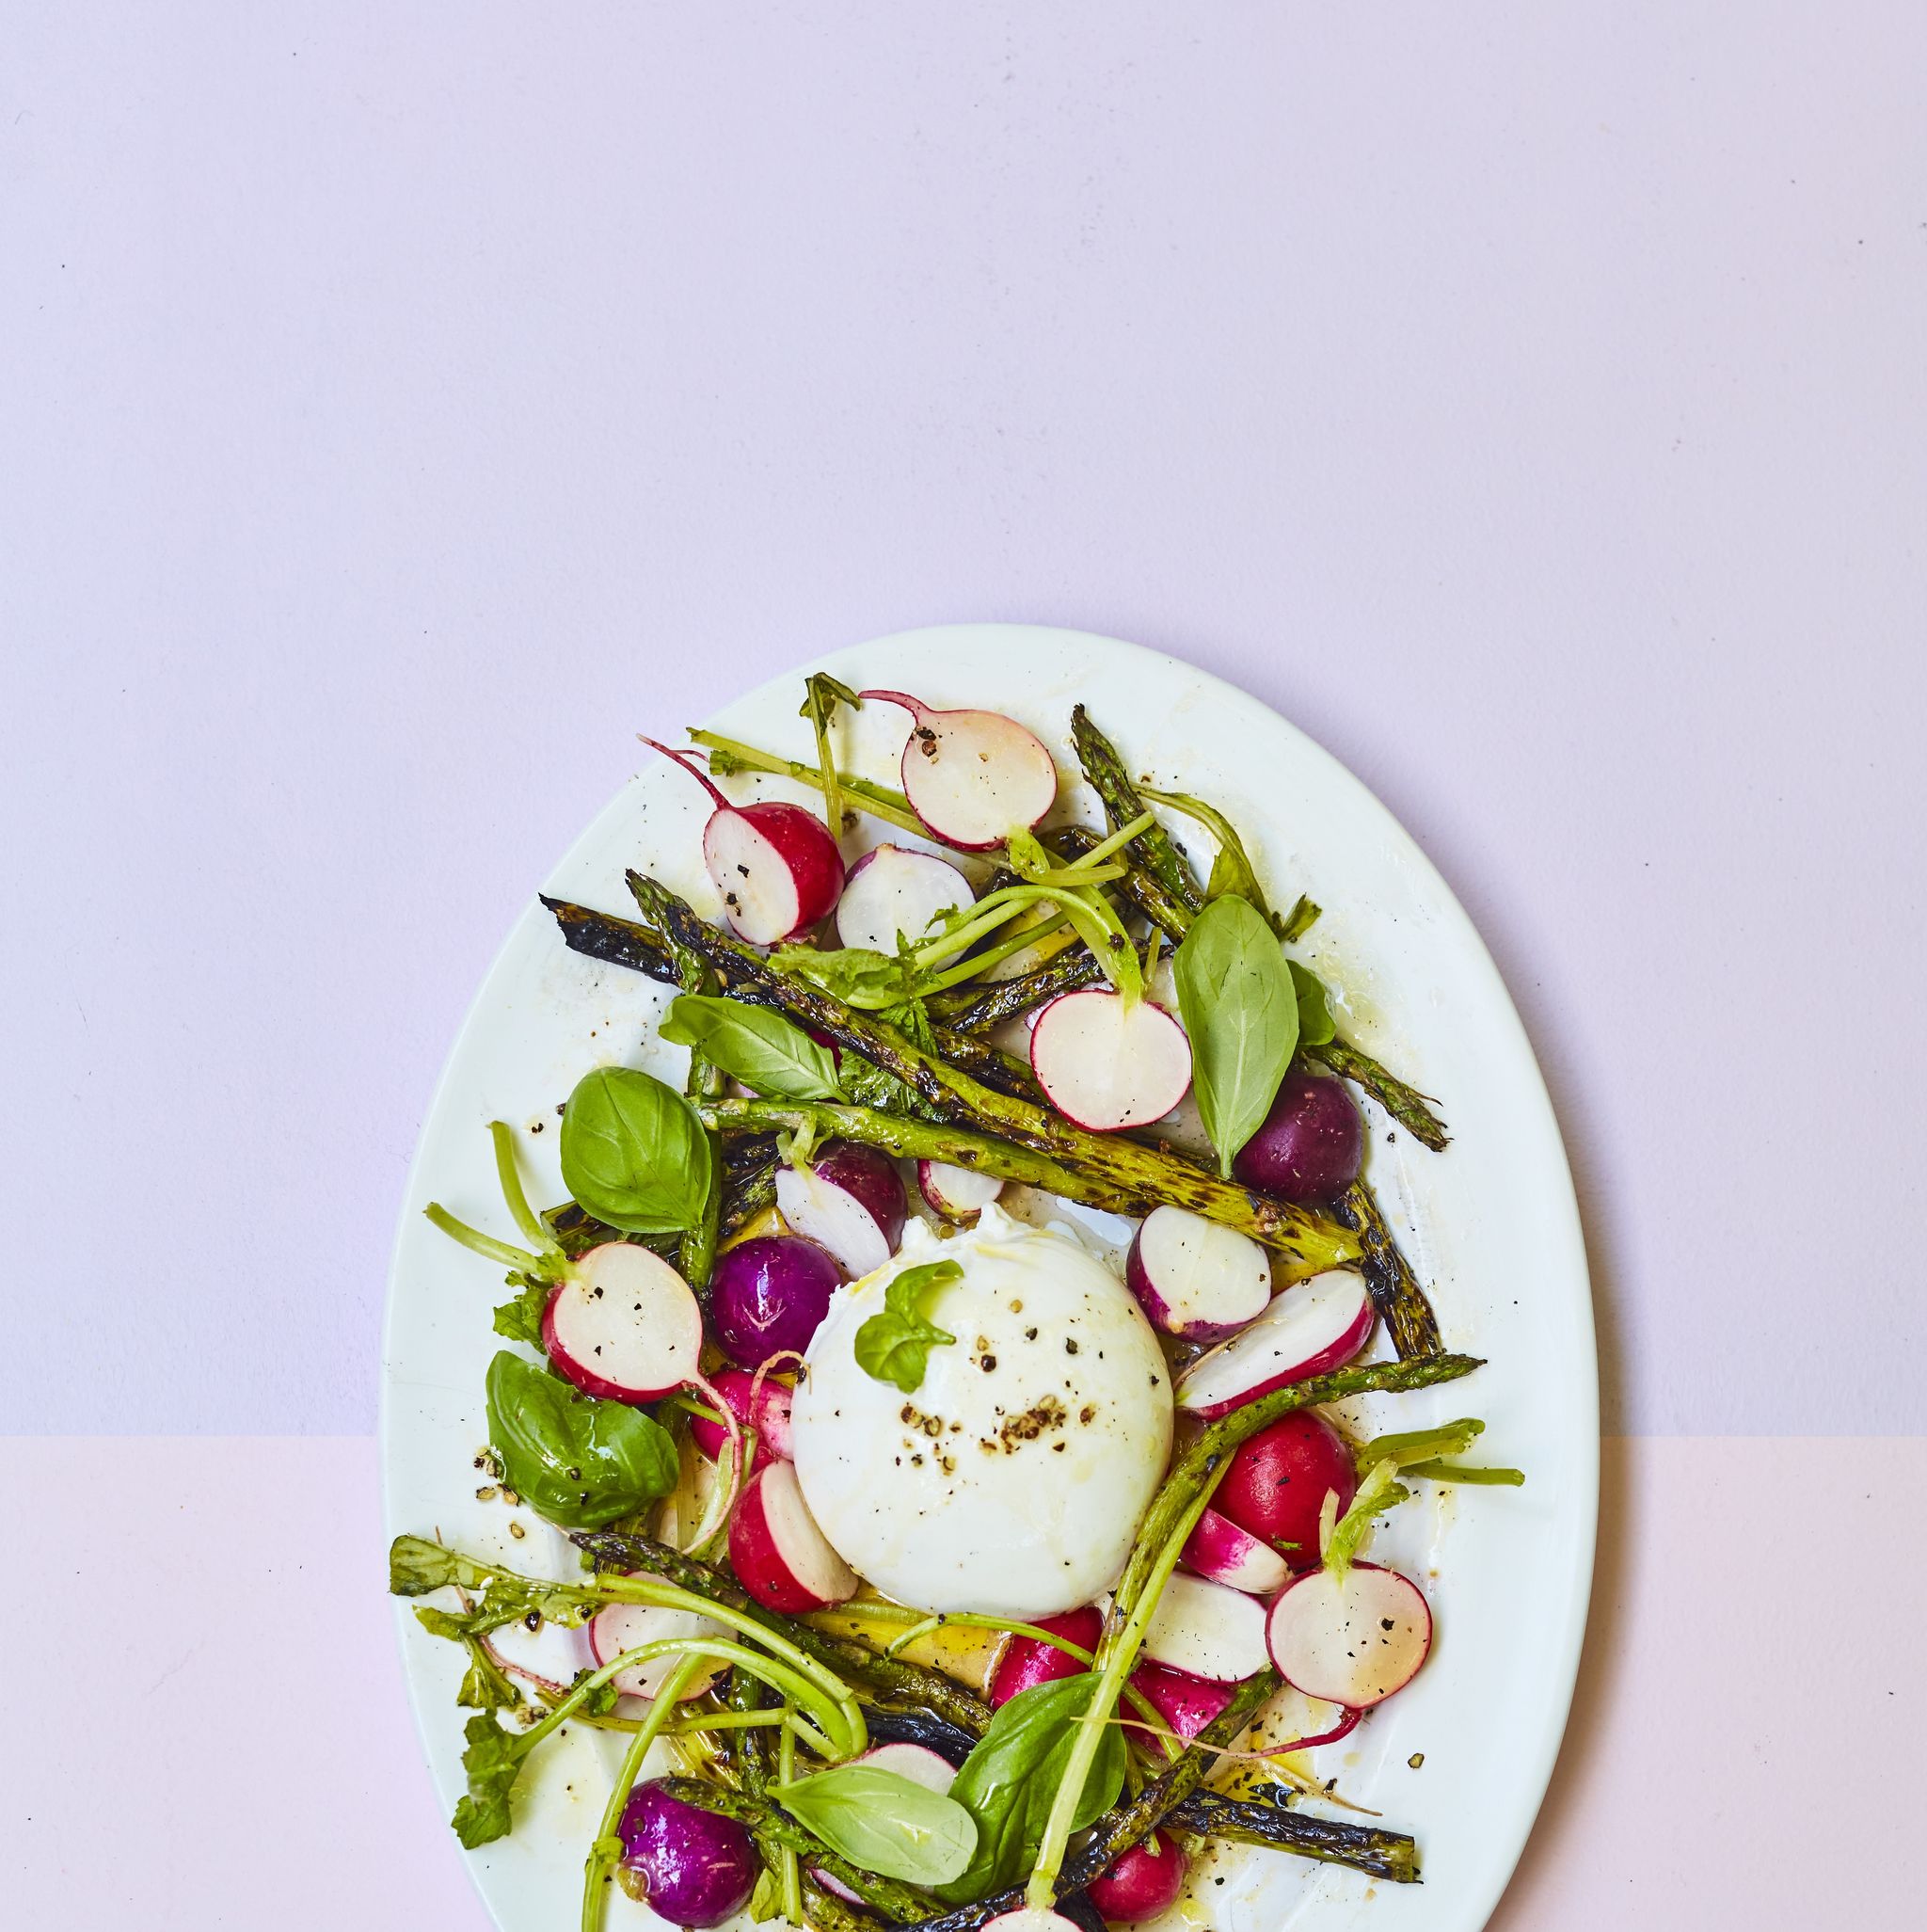 Best Asparagus Salad - How To Make Griddled Asparagus, Radishes And Burrata